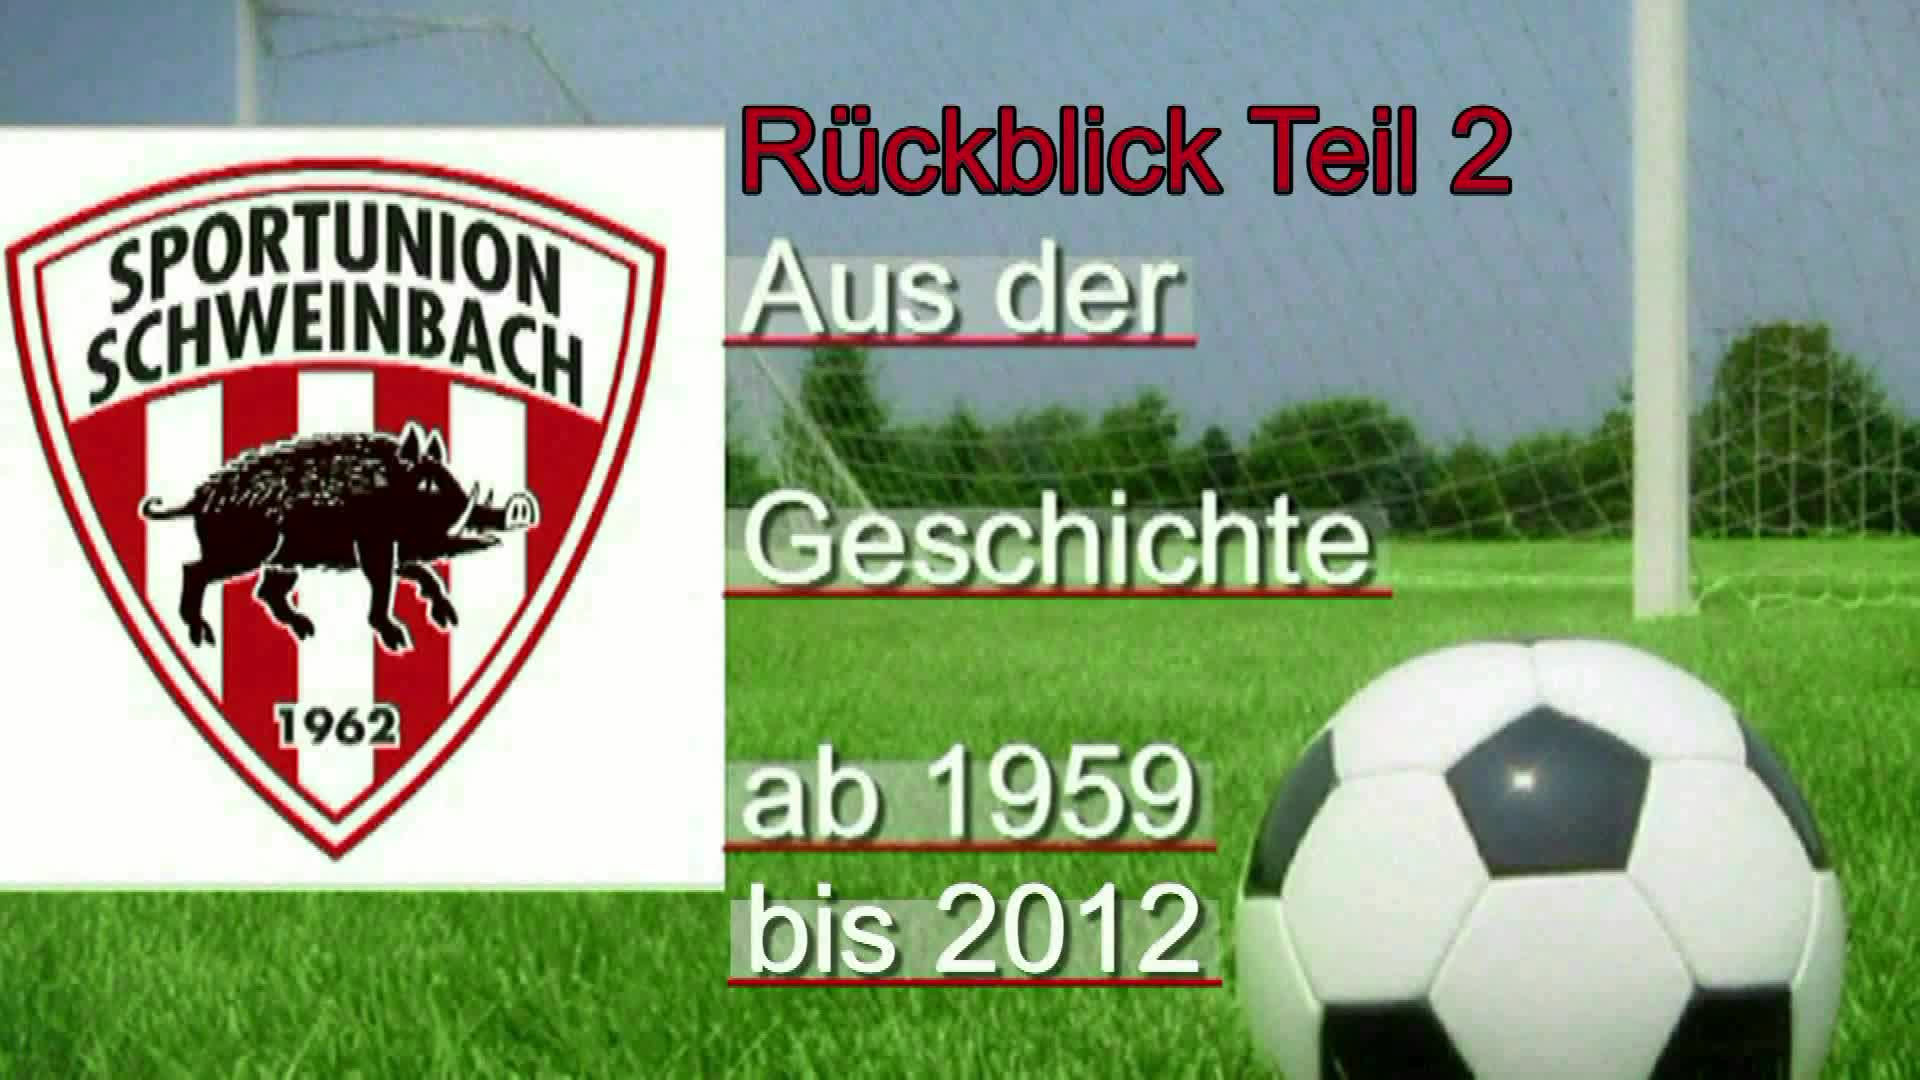 Rückblick-Sportunion Schweinbach, Teil 2